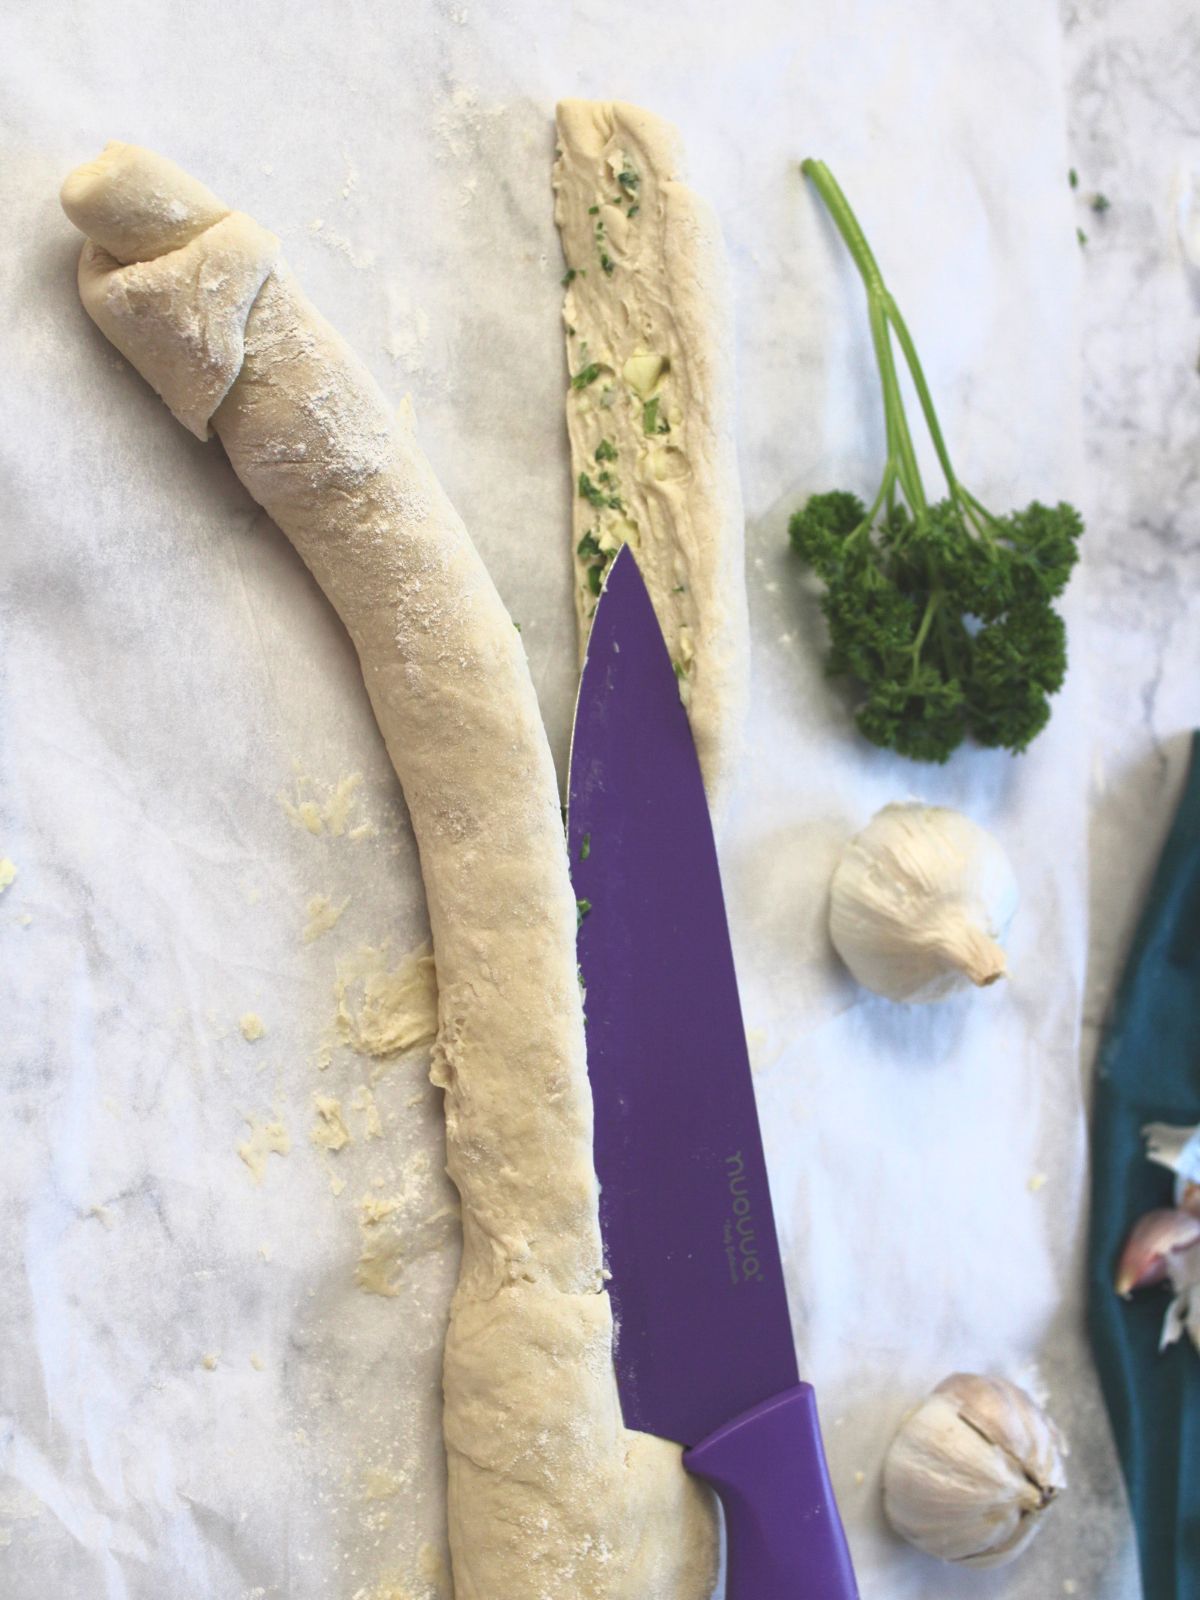 Garlic bread dough log being sliced in half vertically.